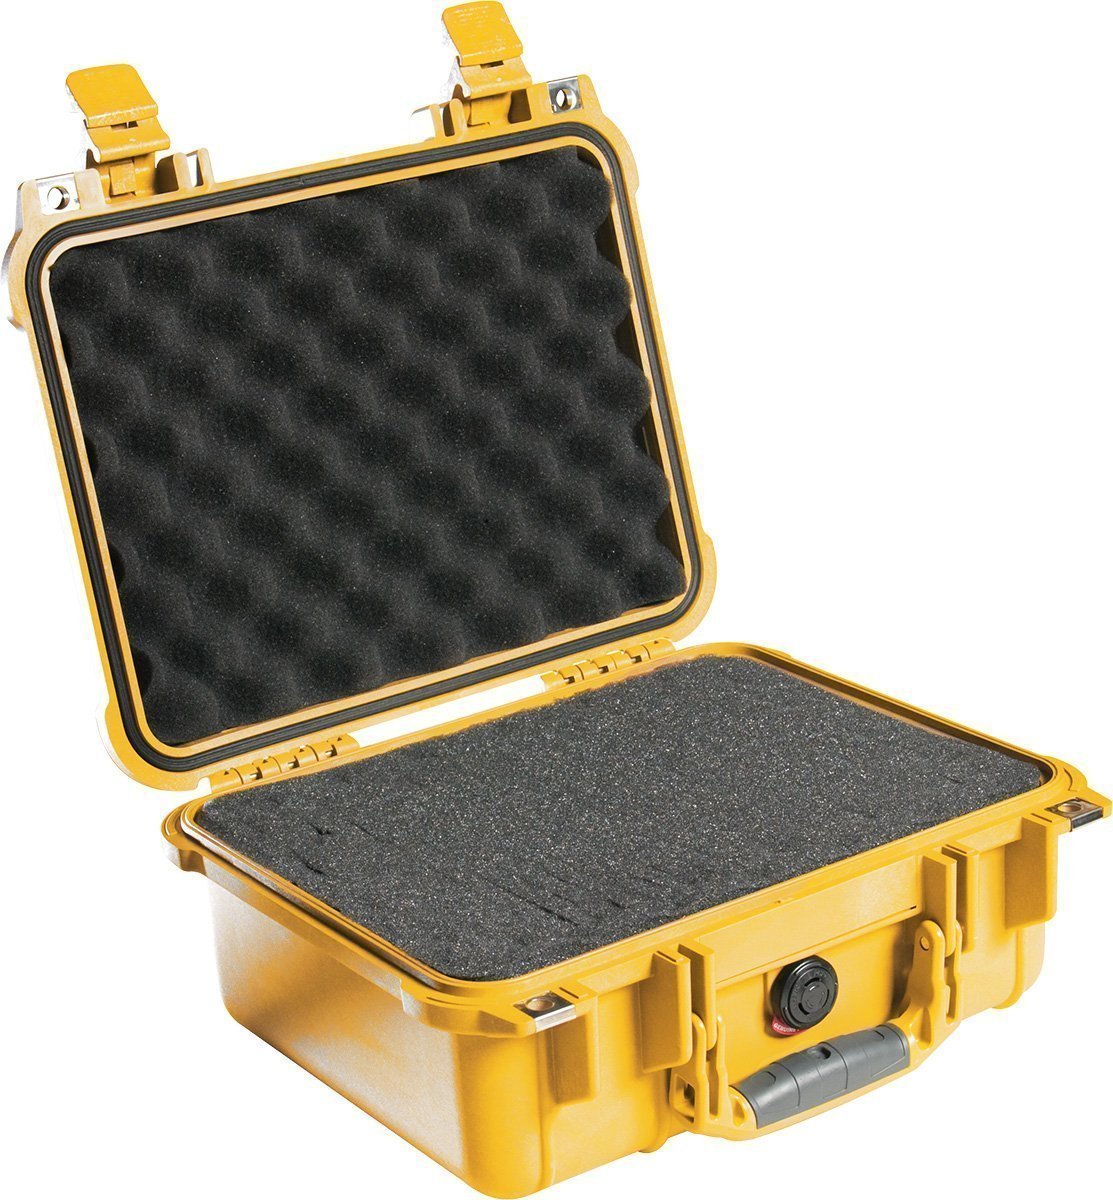 Pelican 1400 Case with Foam Cases Pelican Products Tactical Gear Supplier Tactical Distributors Australia